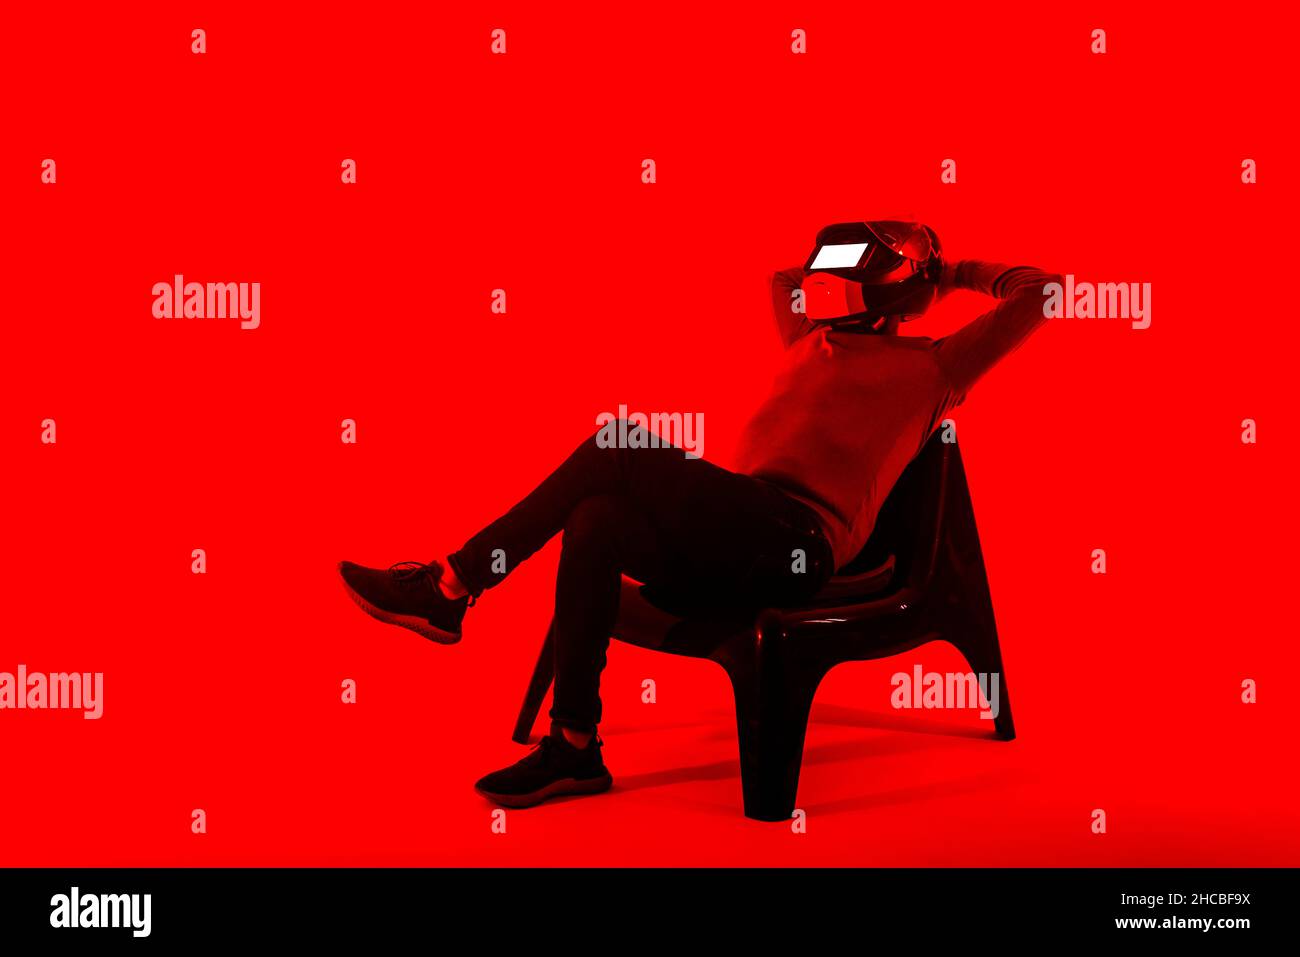 Man wearing helmet using digital tablet on red background Stock Photo